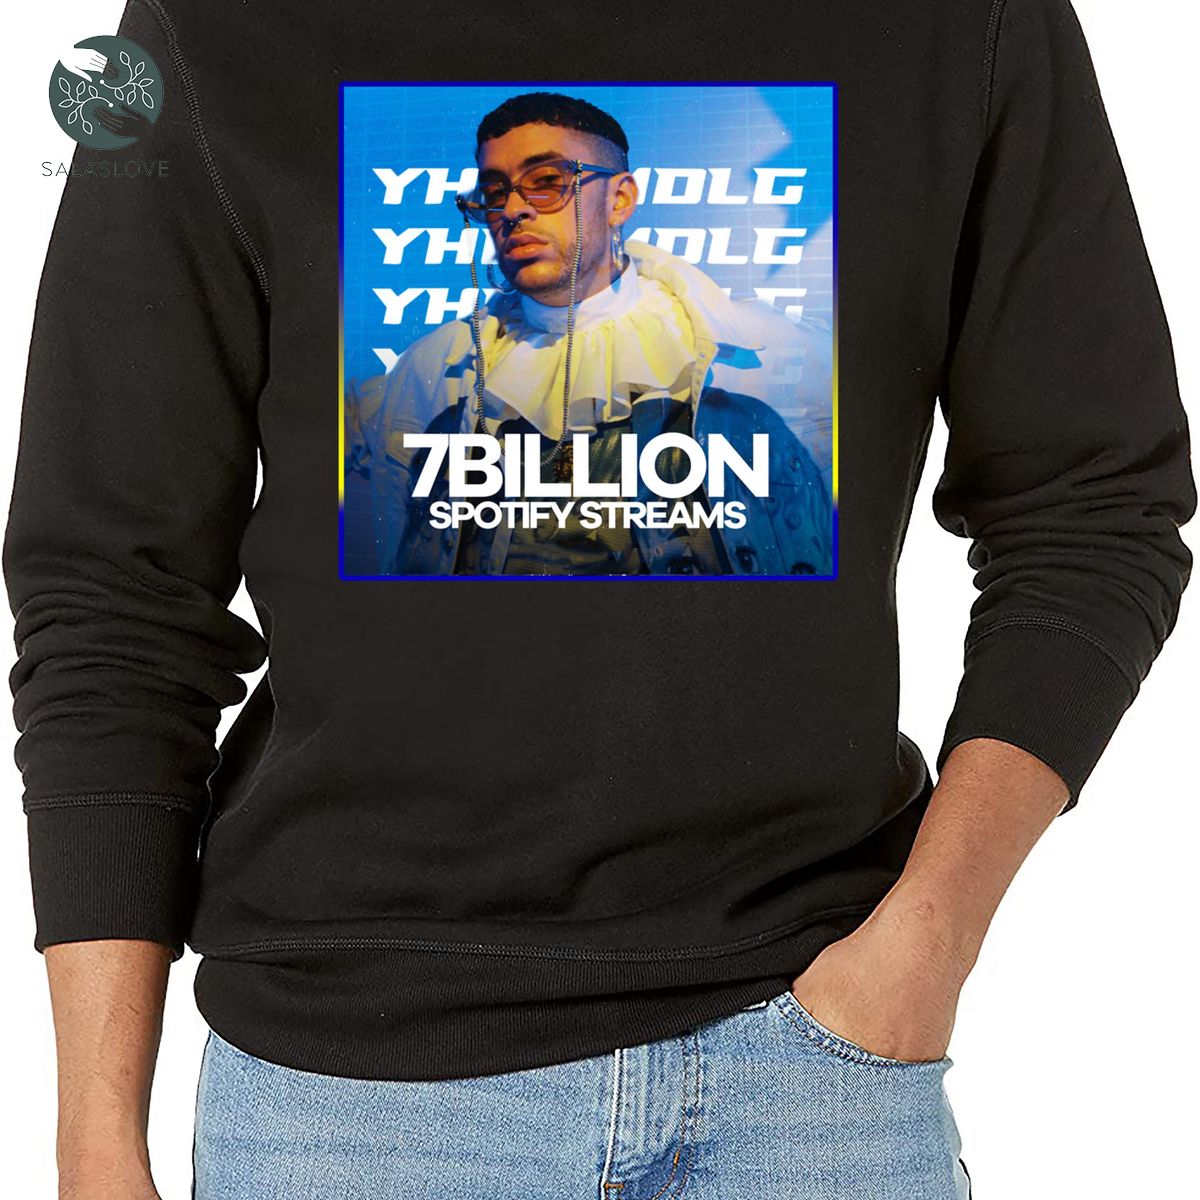 Bad Bunny Exceeds 7 Billion Streams On Spotify Shirt